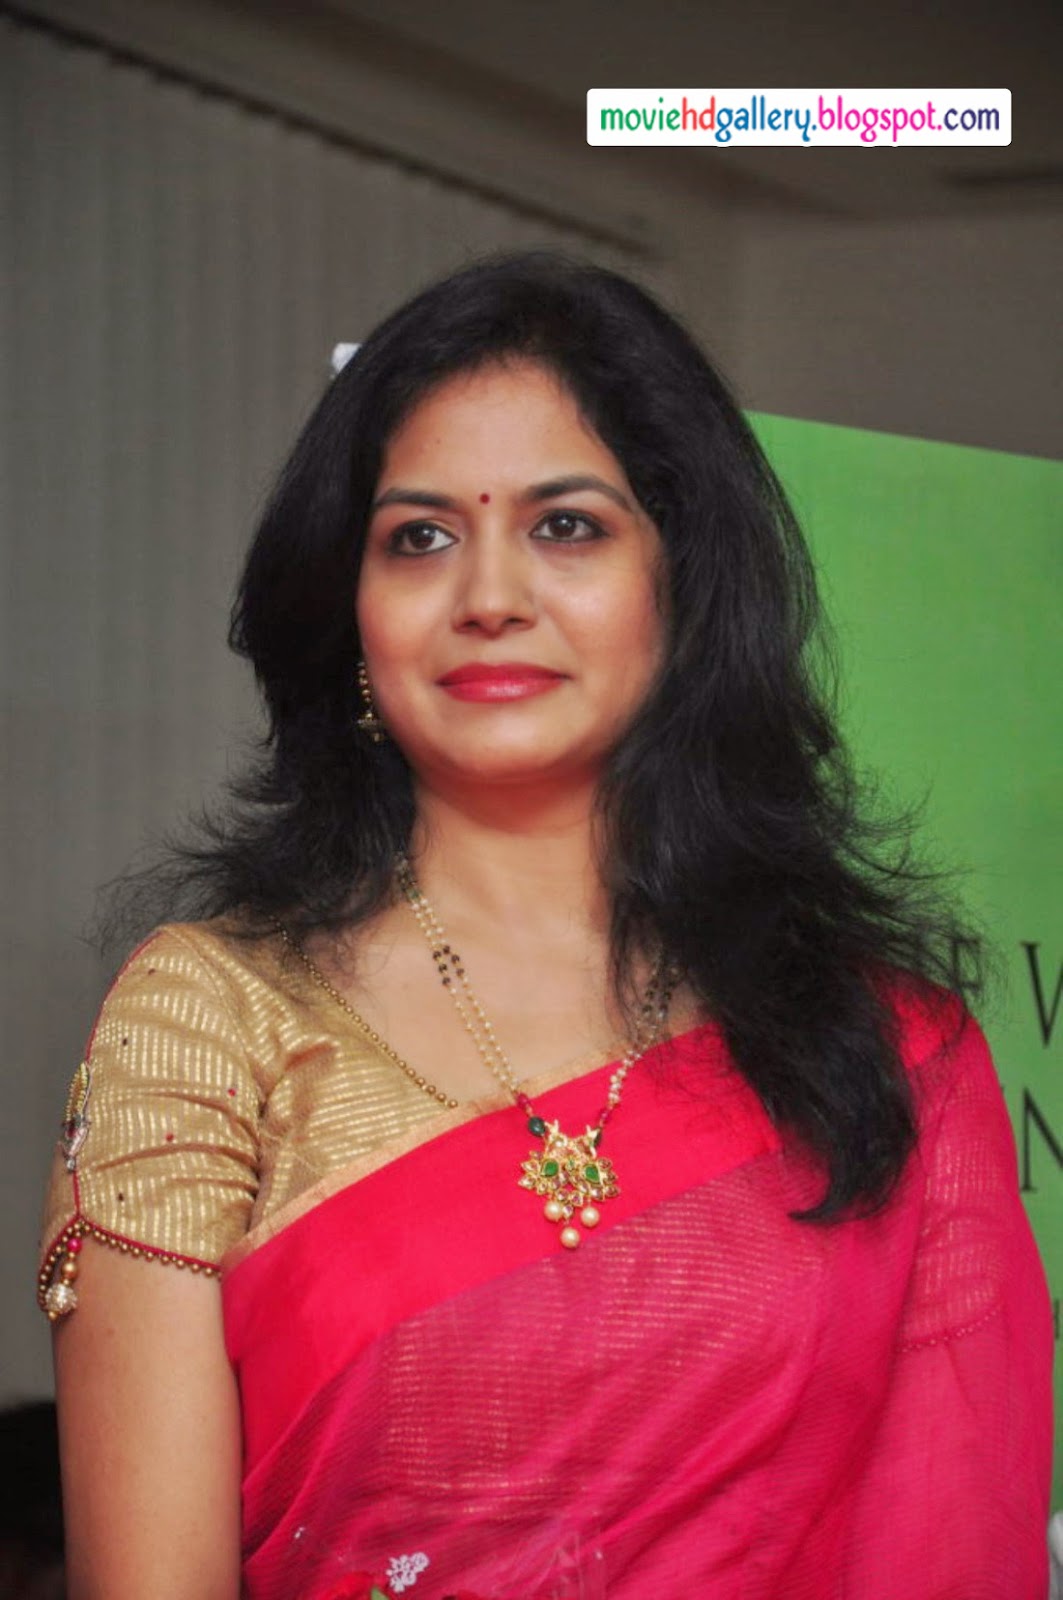 Singer Sunitha Beautiful Photos Moviehdgallery